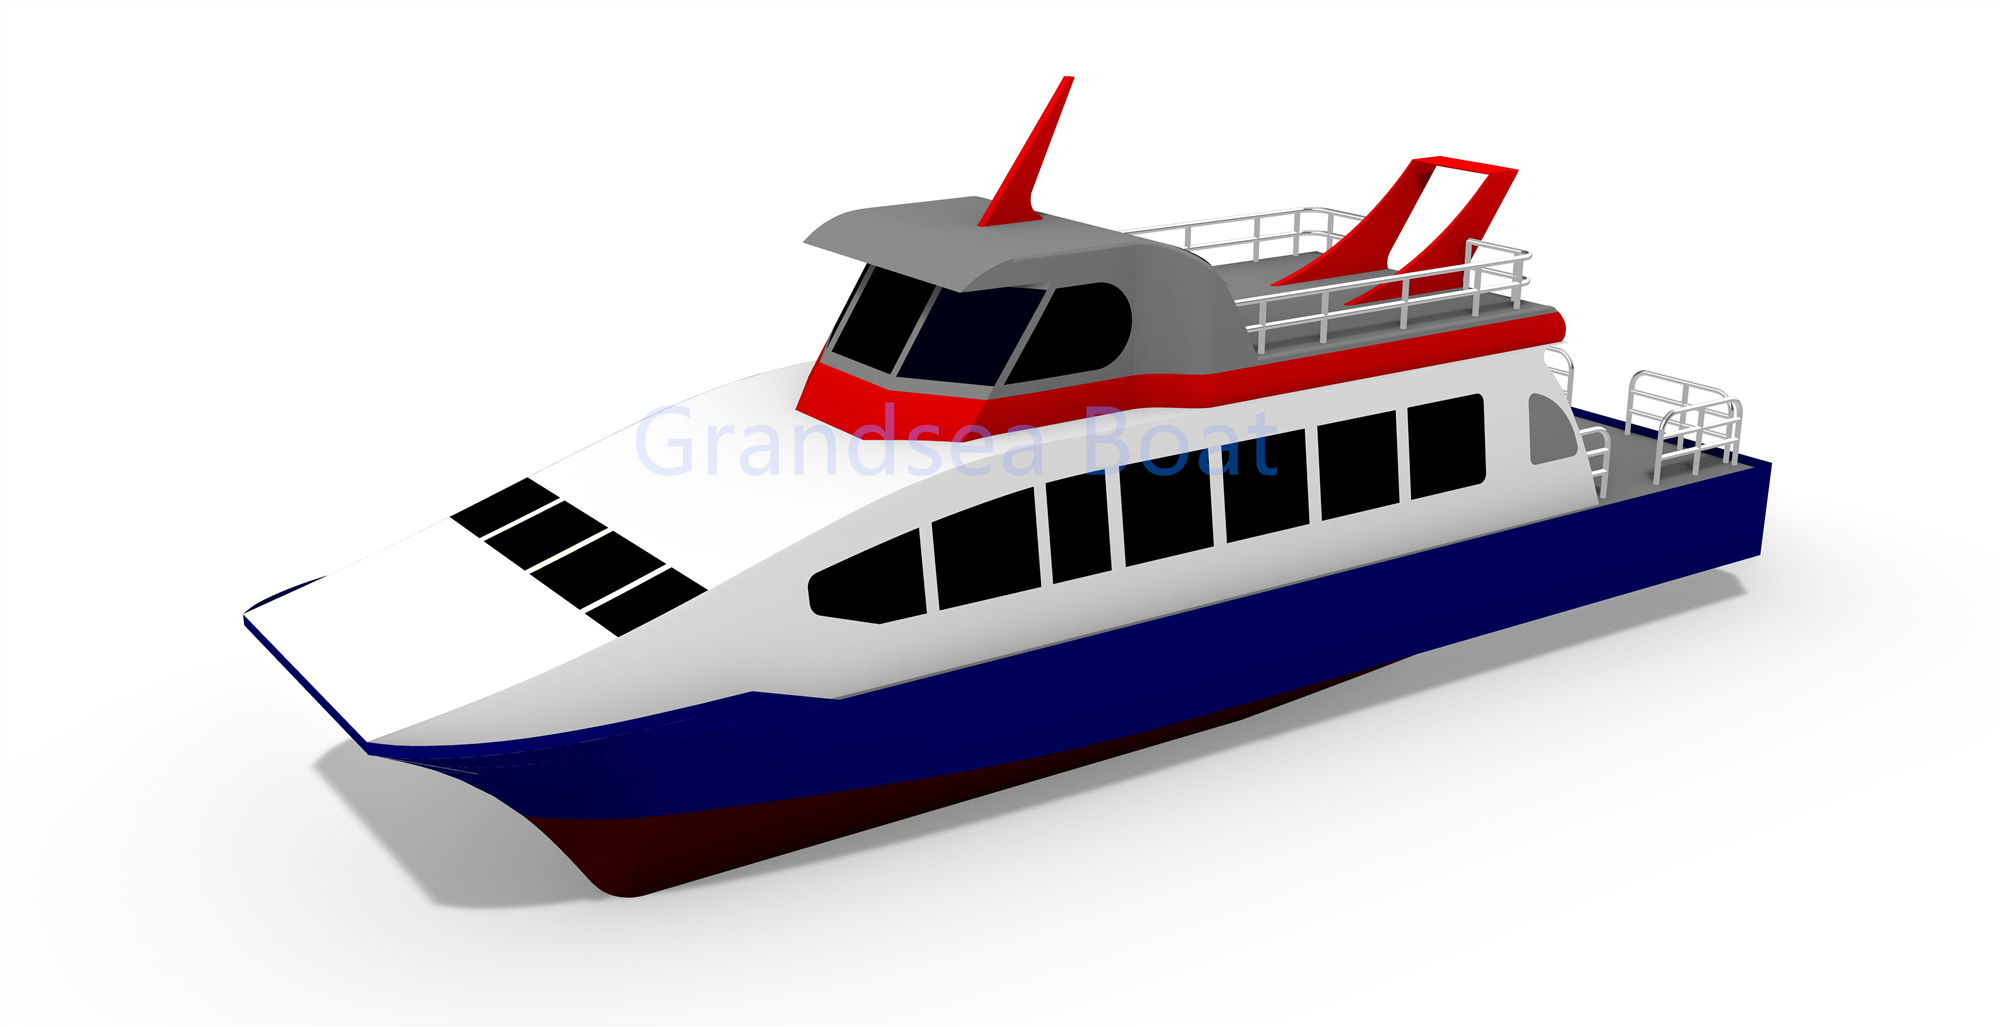 16m Aluminum Catamaran Jet 50 Passenger Ferry Boat For Sale